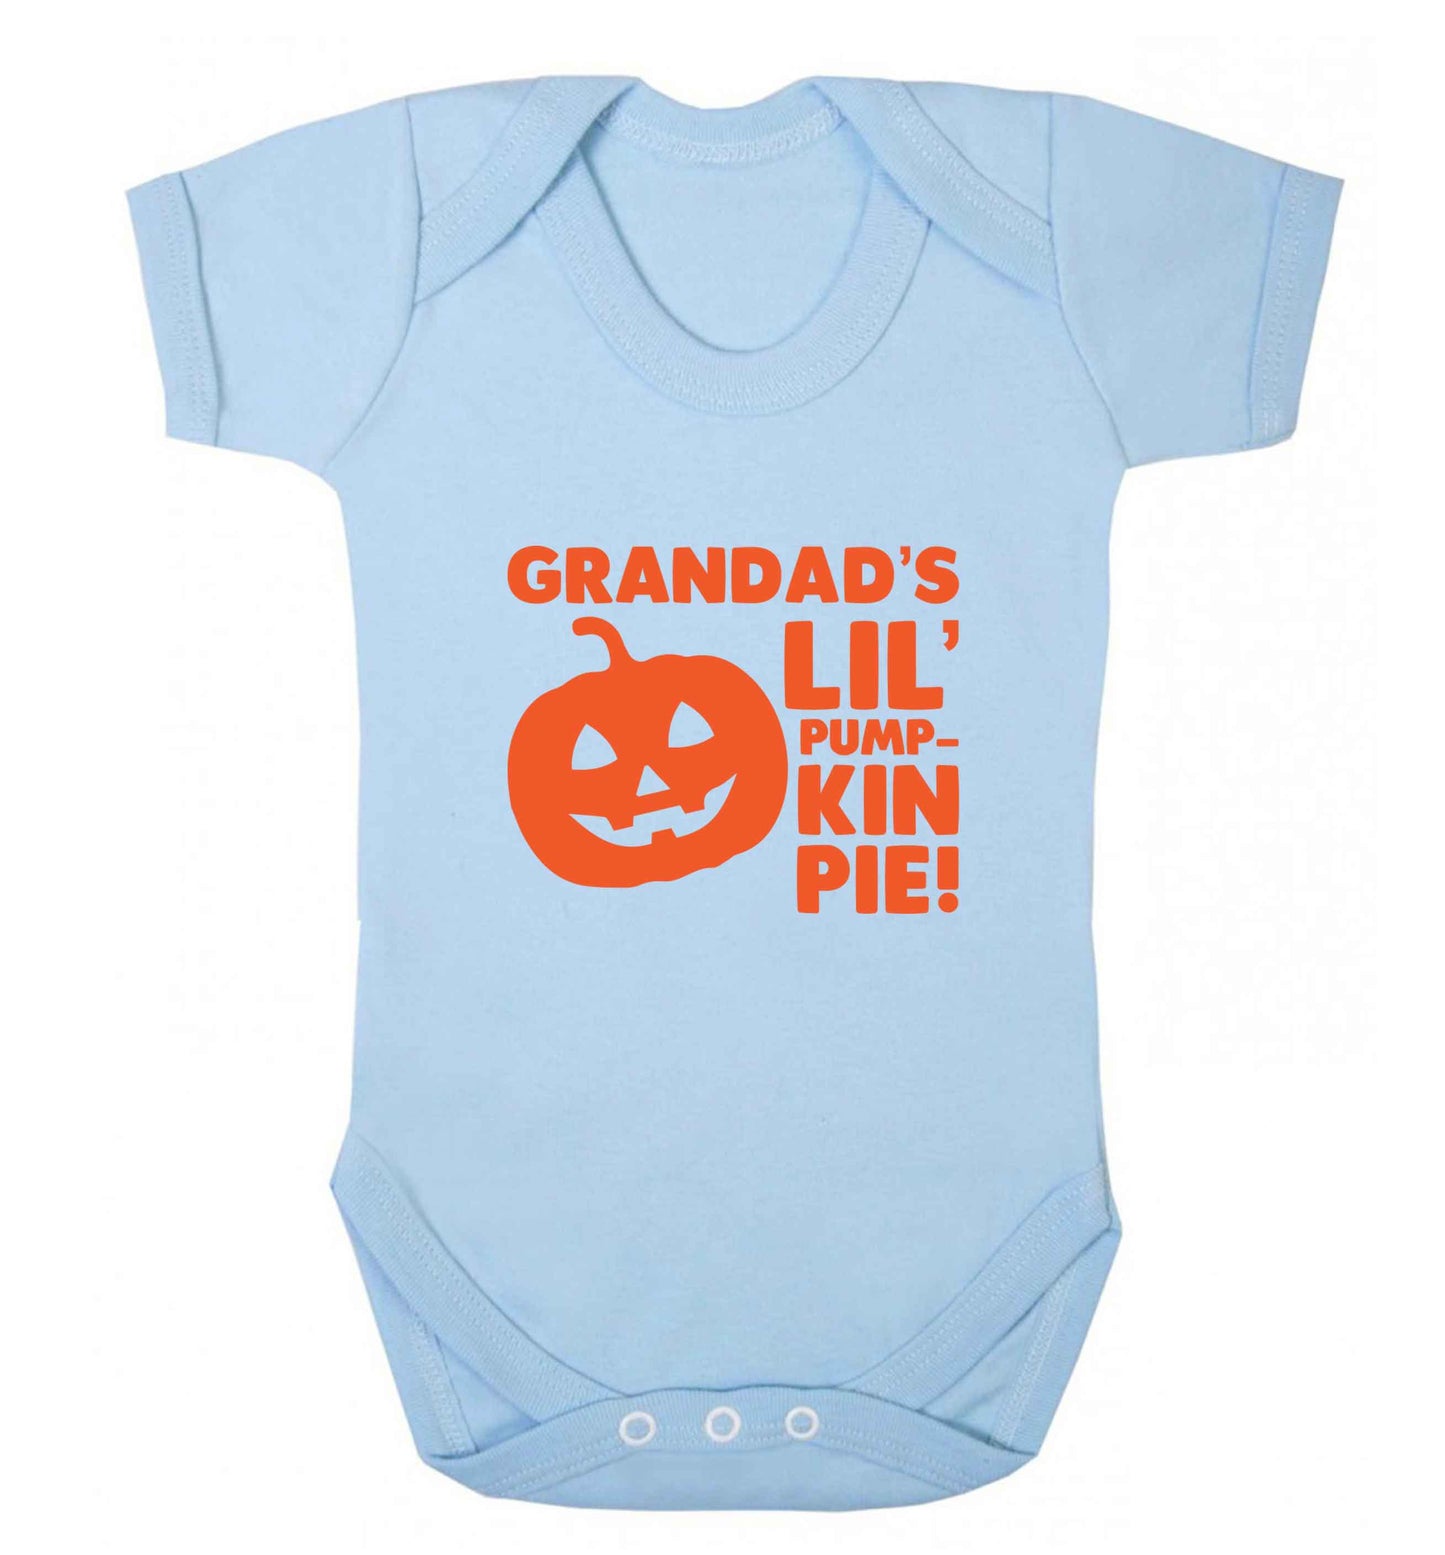 Grandad's lil' pumpkin pie baby vest pale blue 18-24 months